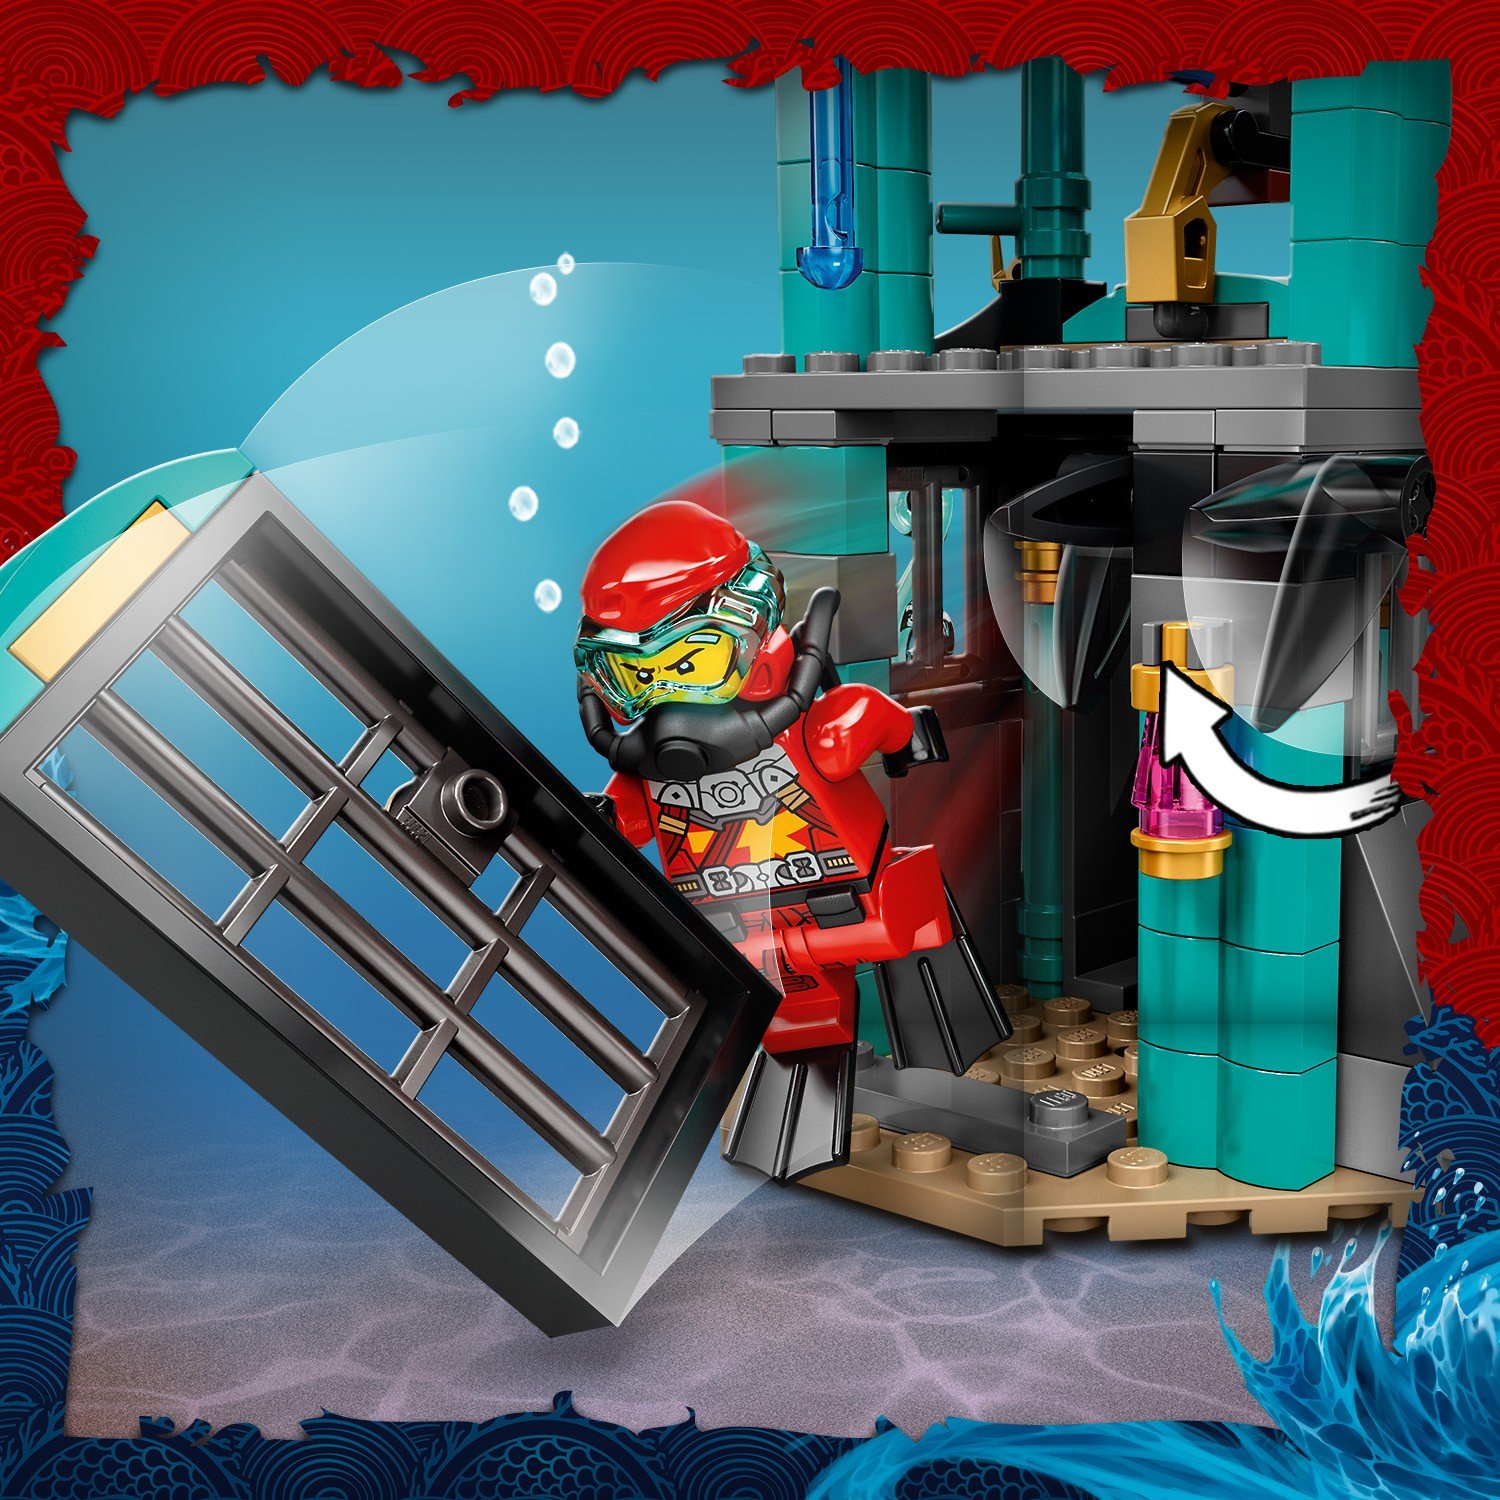 Lego Ninjago 71755 Храм Бескрайнего моря